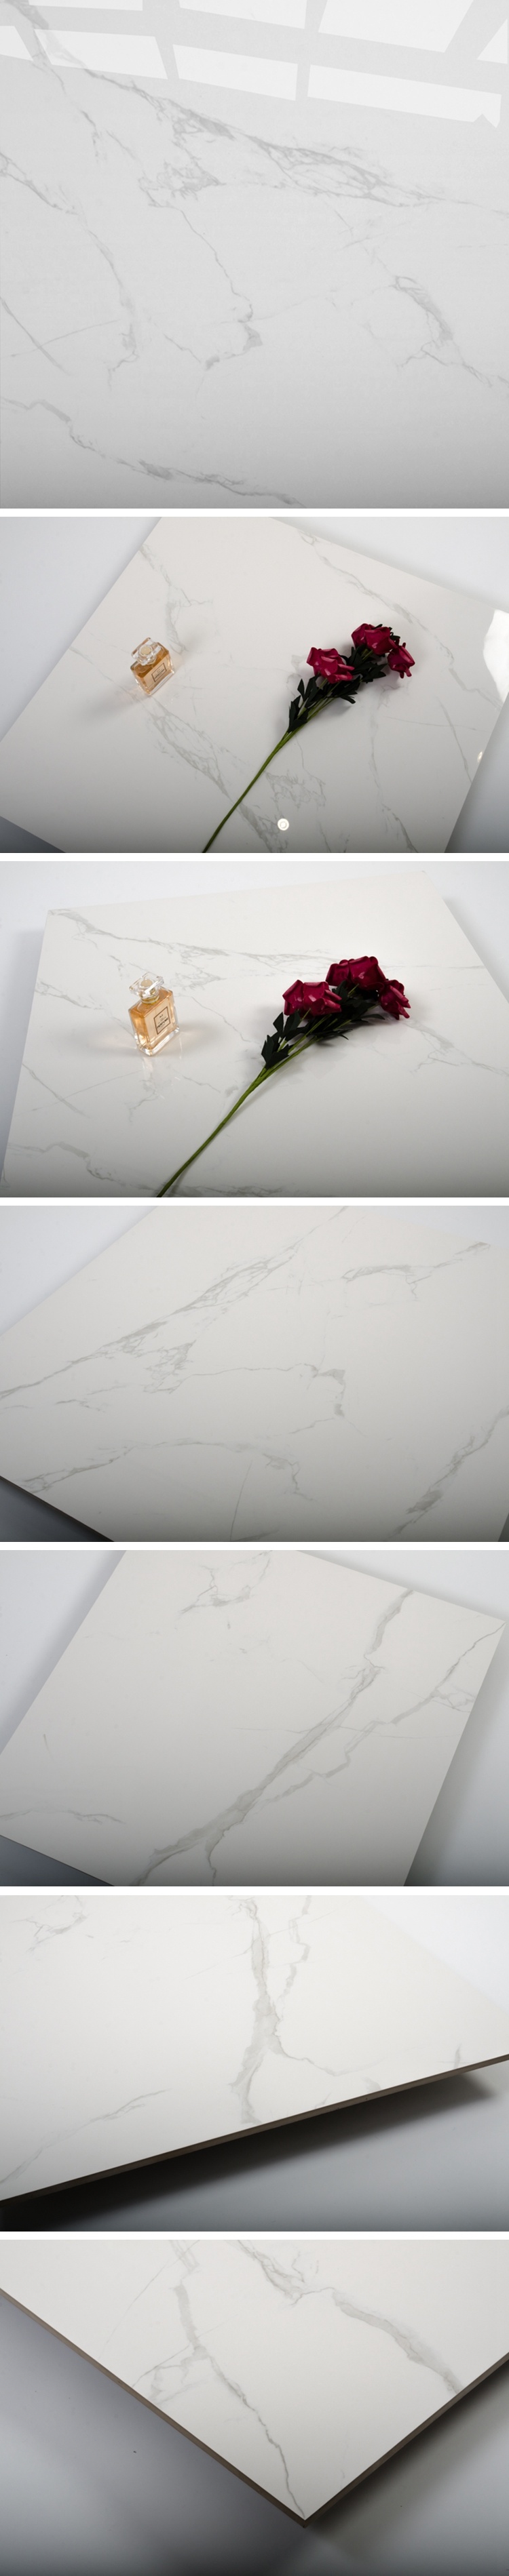 600X600mm Bedroom Kitchen Floor Square Carrara White Marble Tile